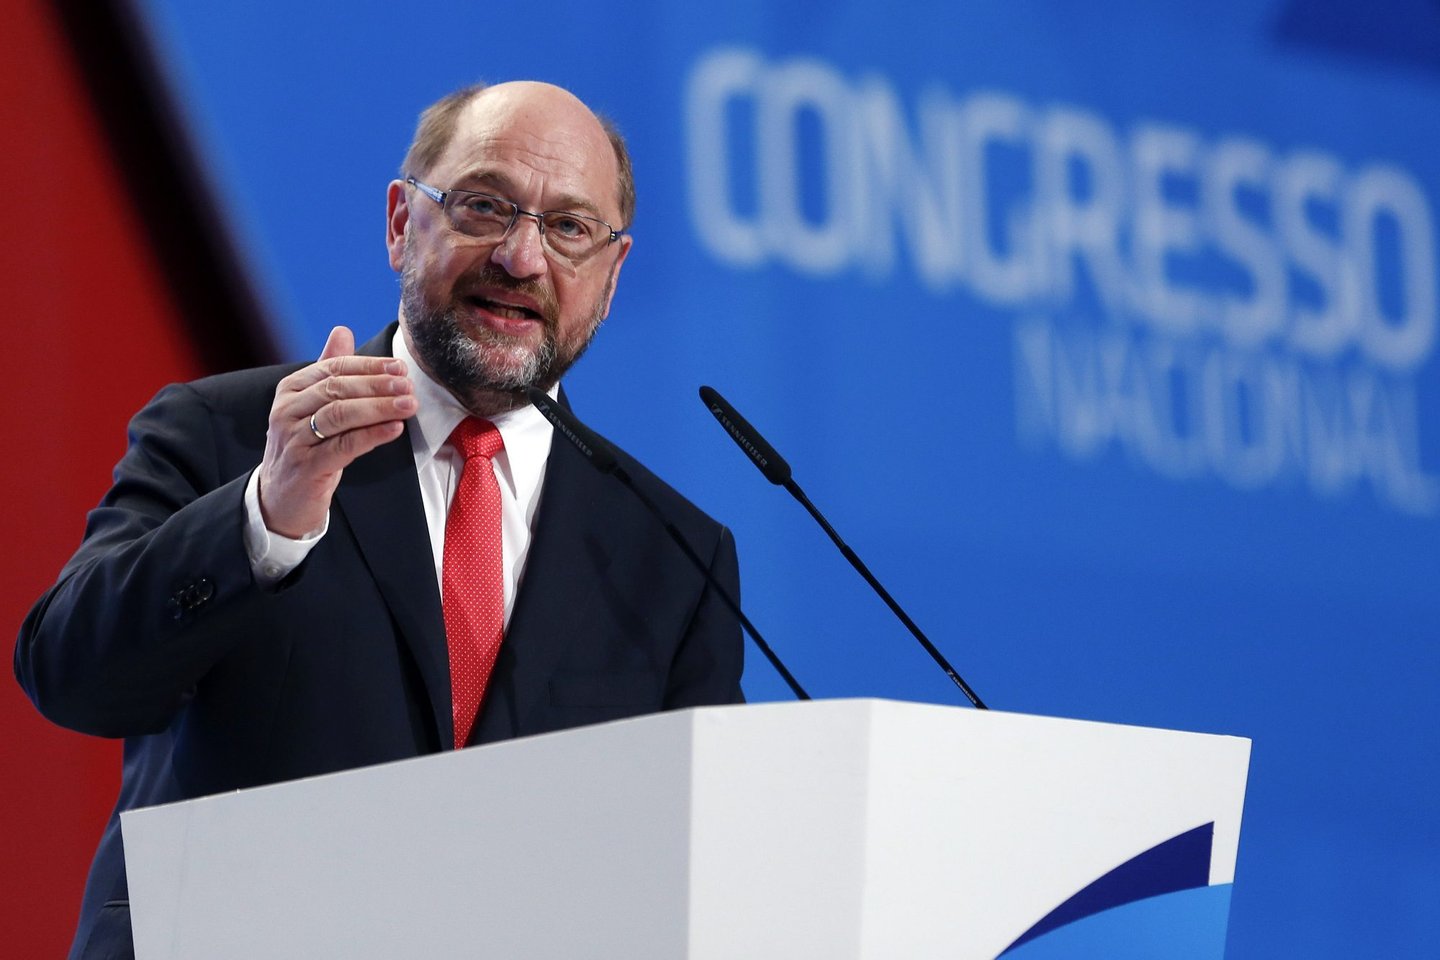 Martin Schulz in socialist congress